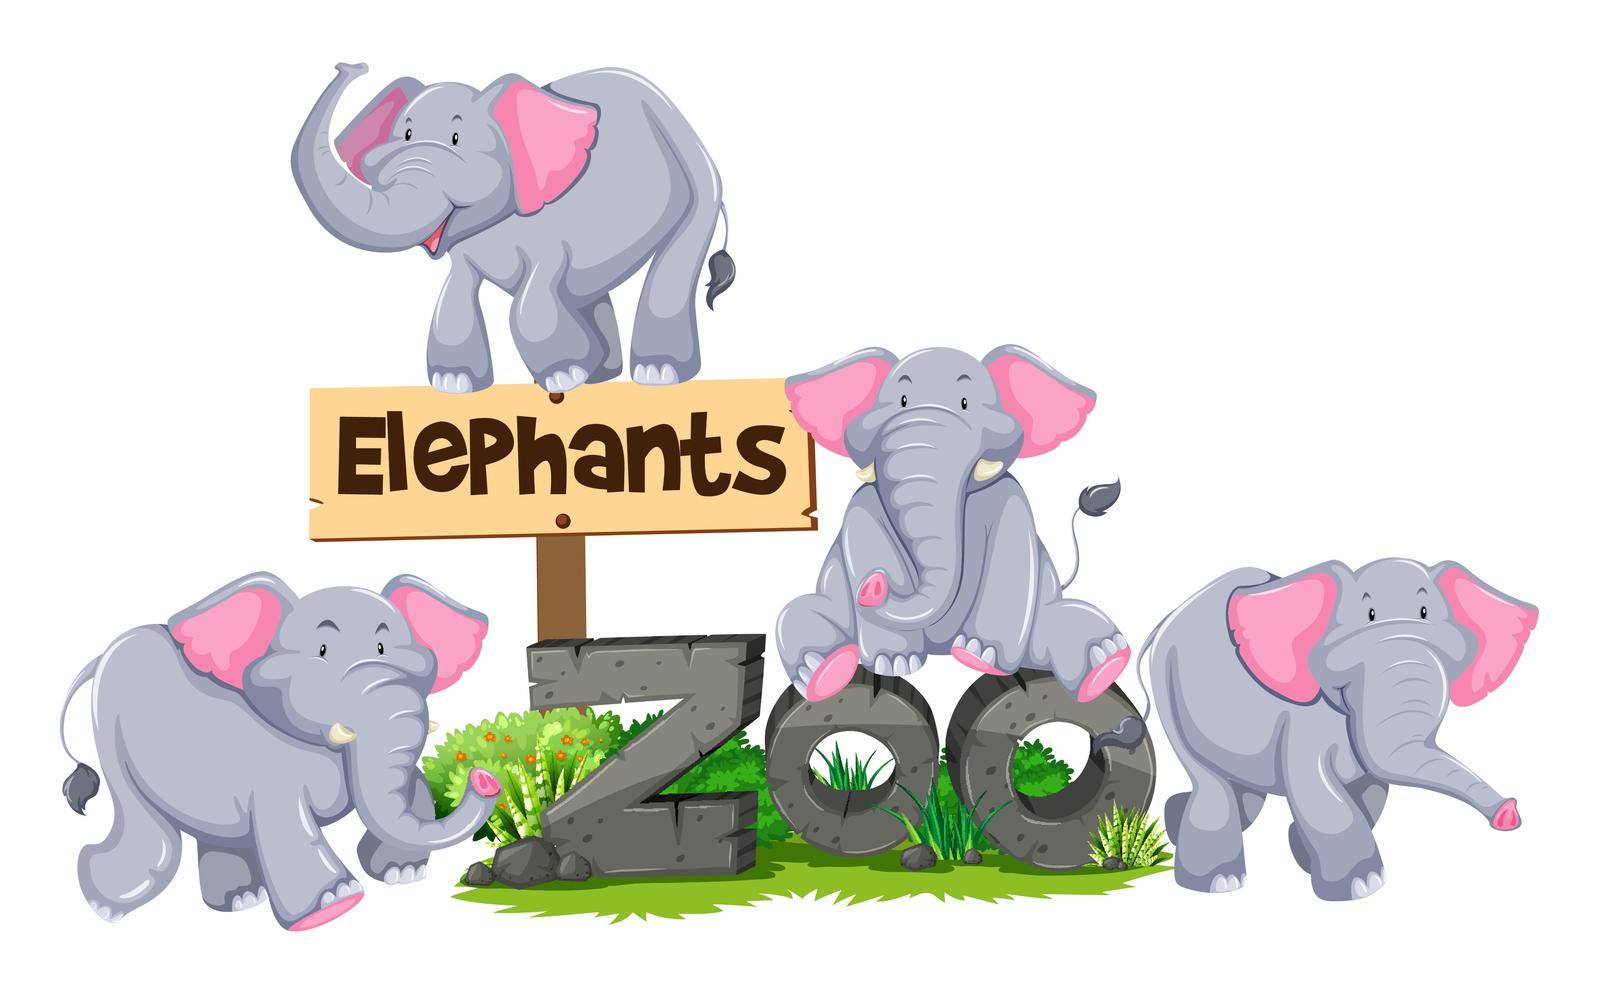 Elephants around the zoo sign by iimages